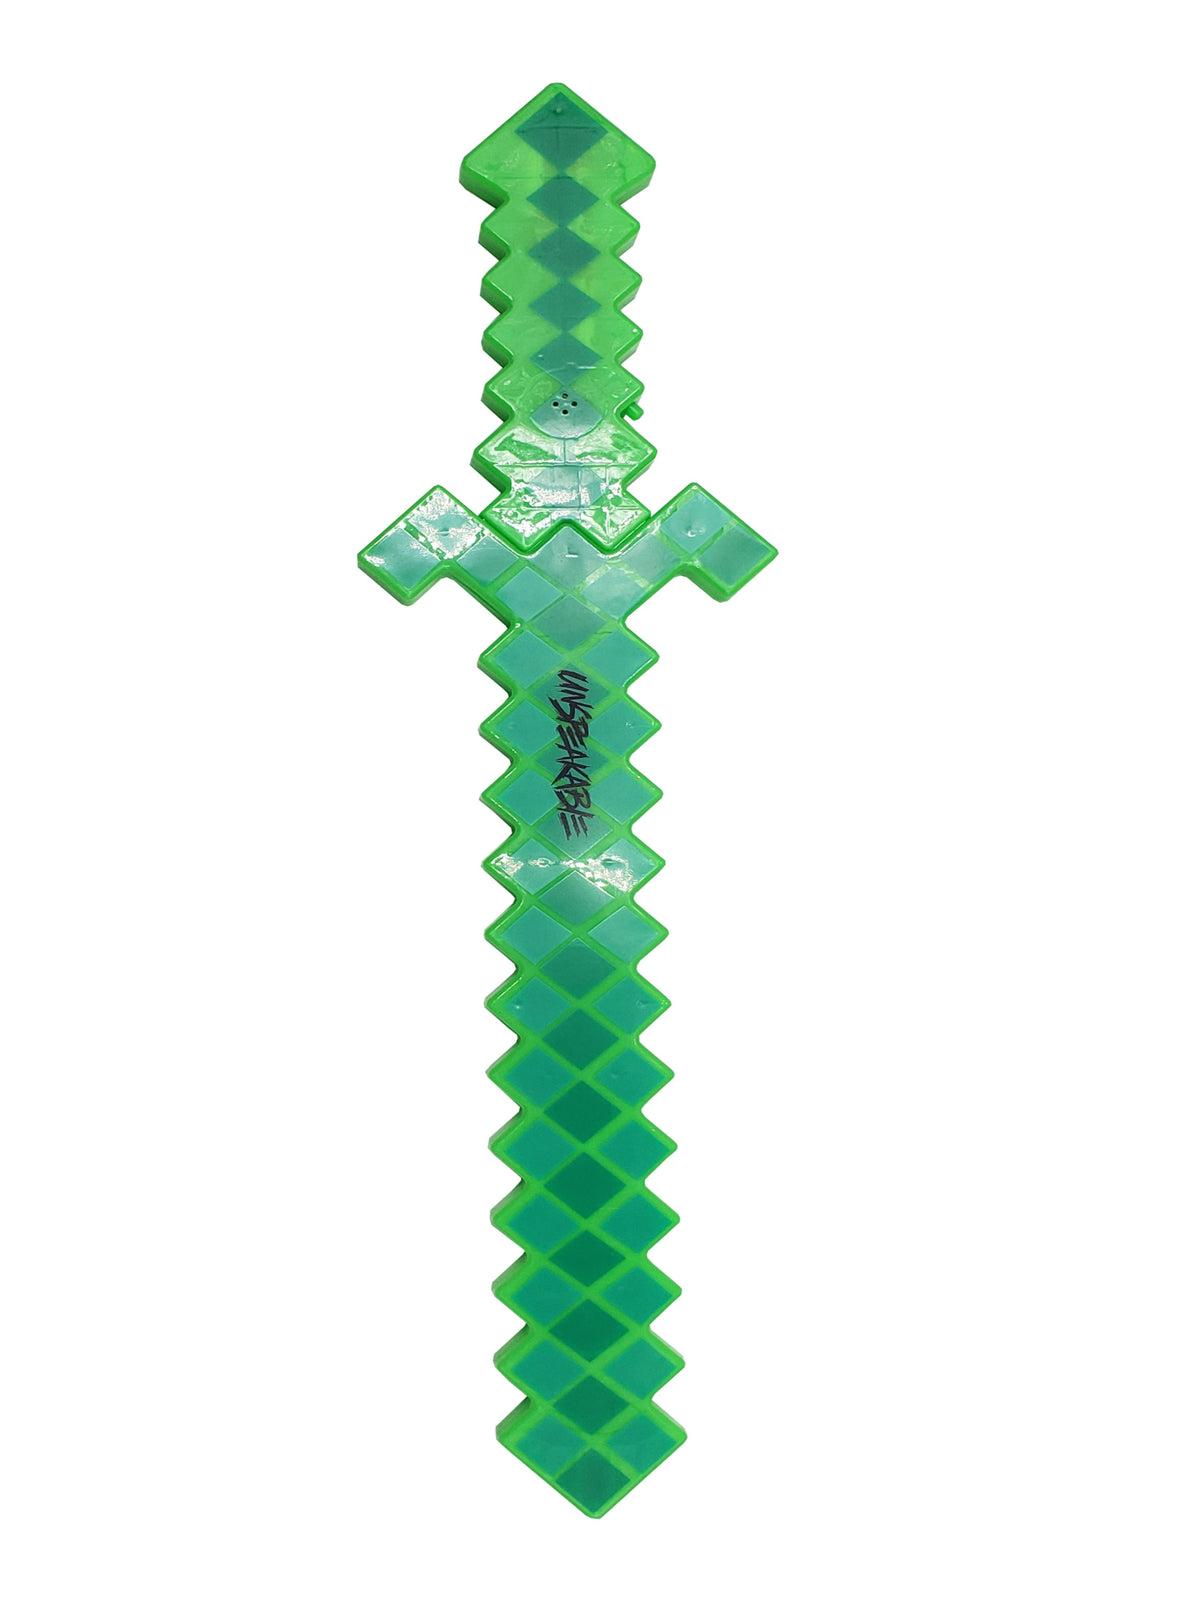 green sword minecraft